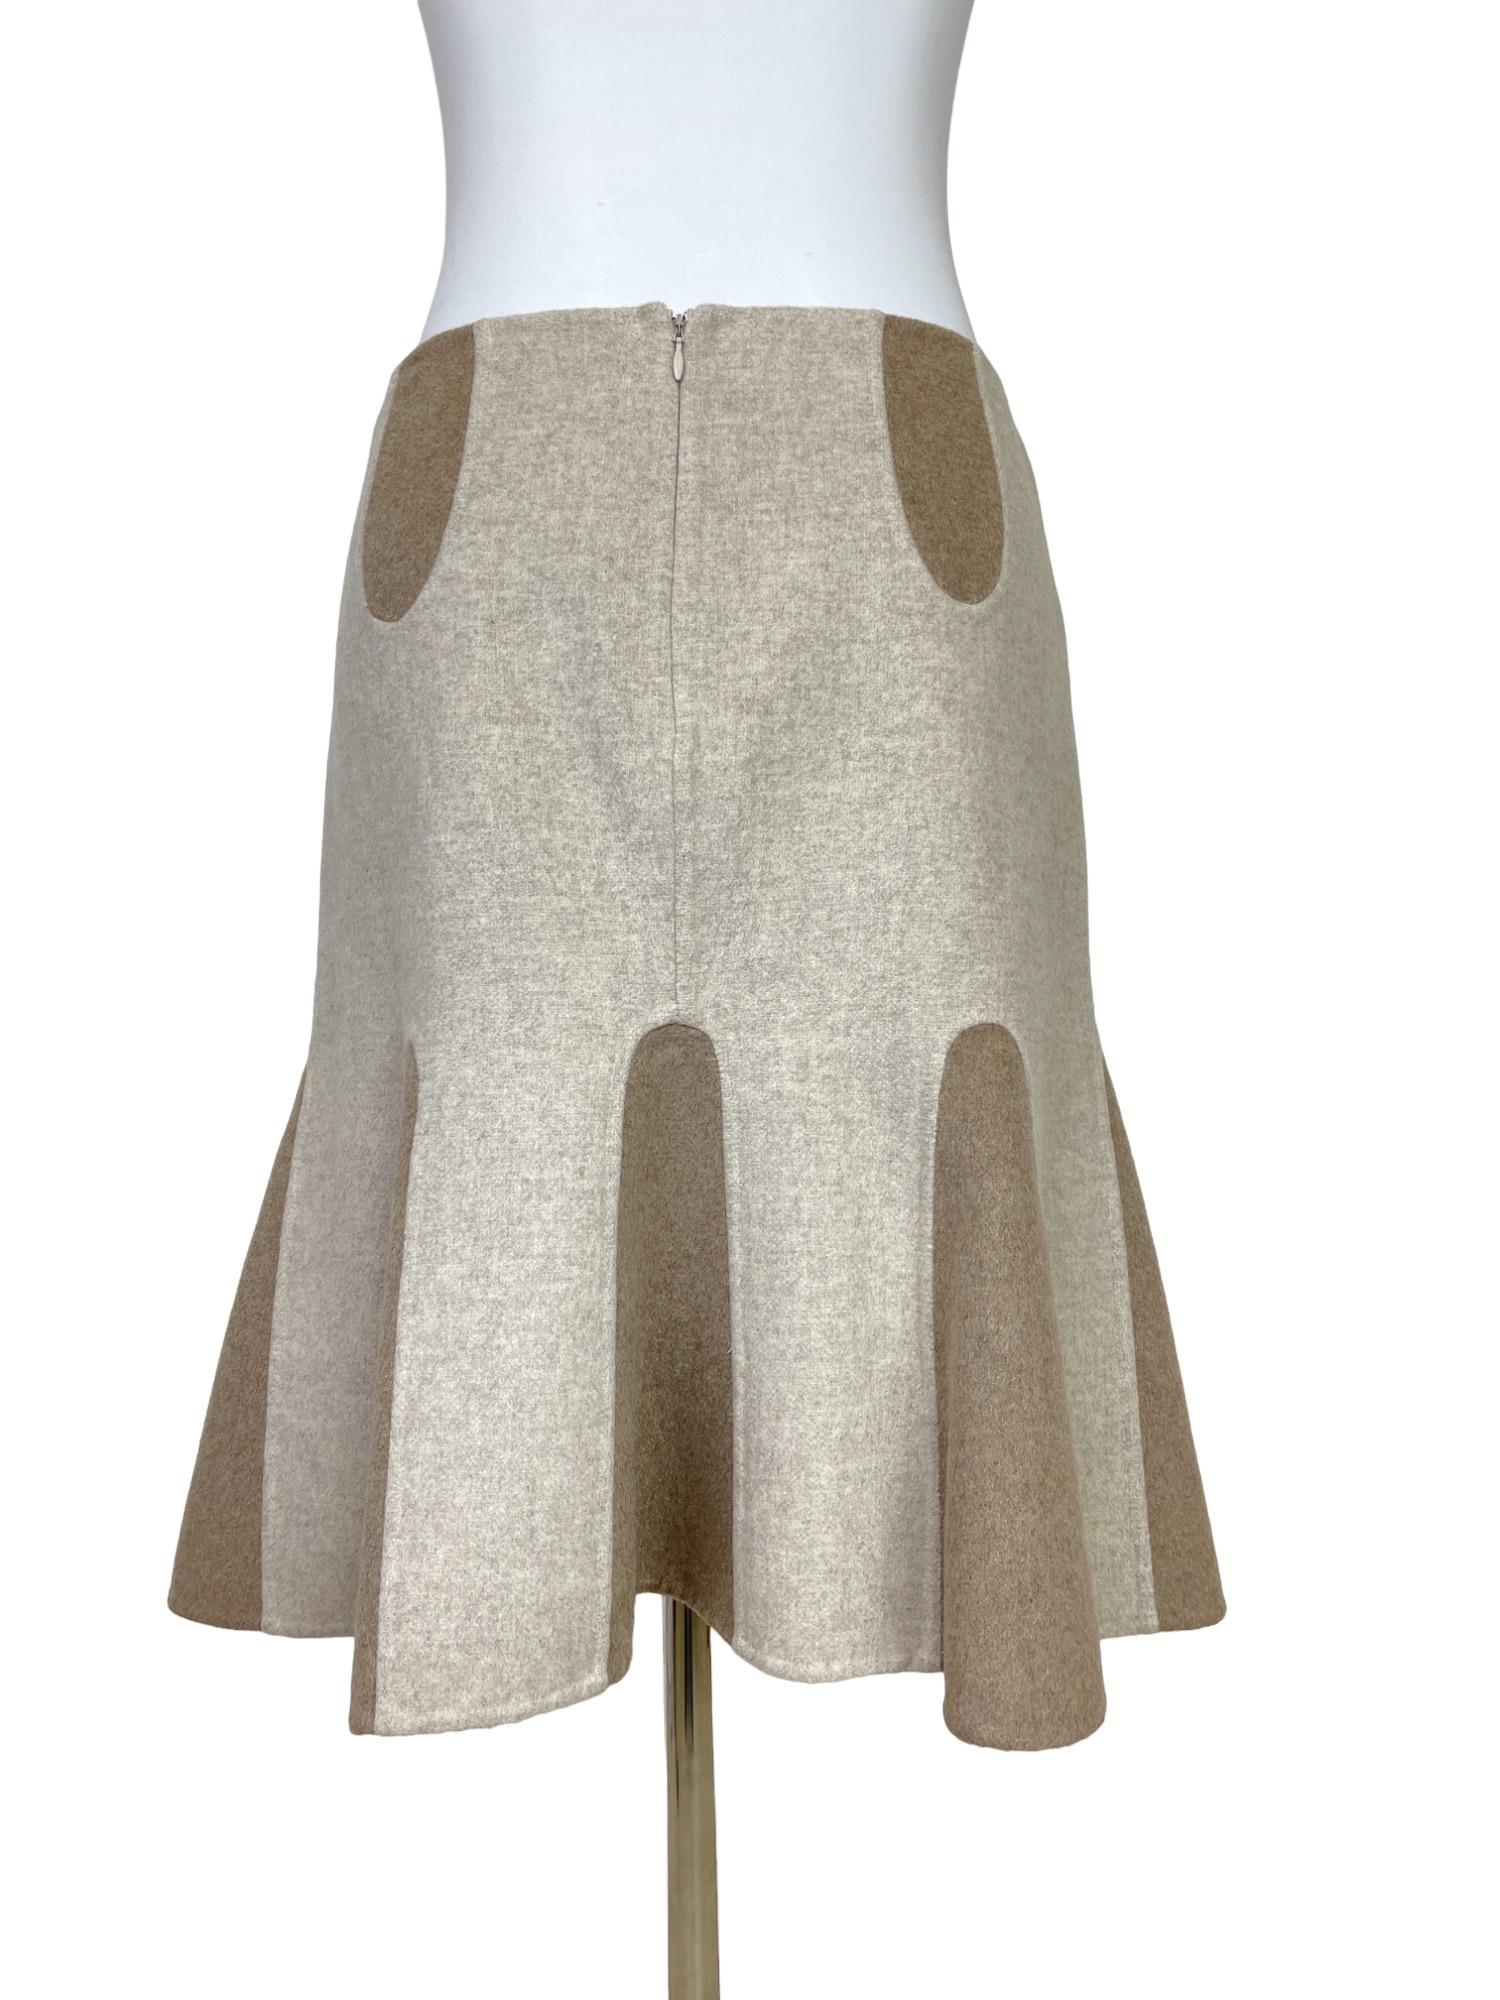 Alexander McQueen Skirt
F/W 2004
Size: 42
Materials: 100% Cashmere
Measures: Waist 40cm / Lenght 53cm
-
NO RETURNS